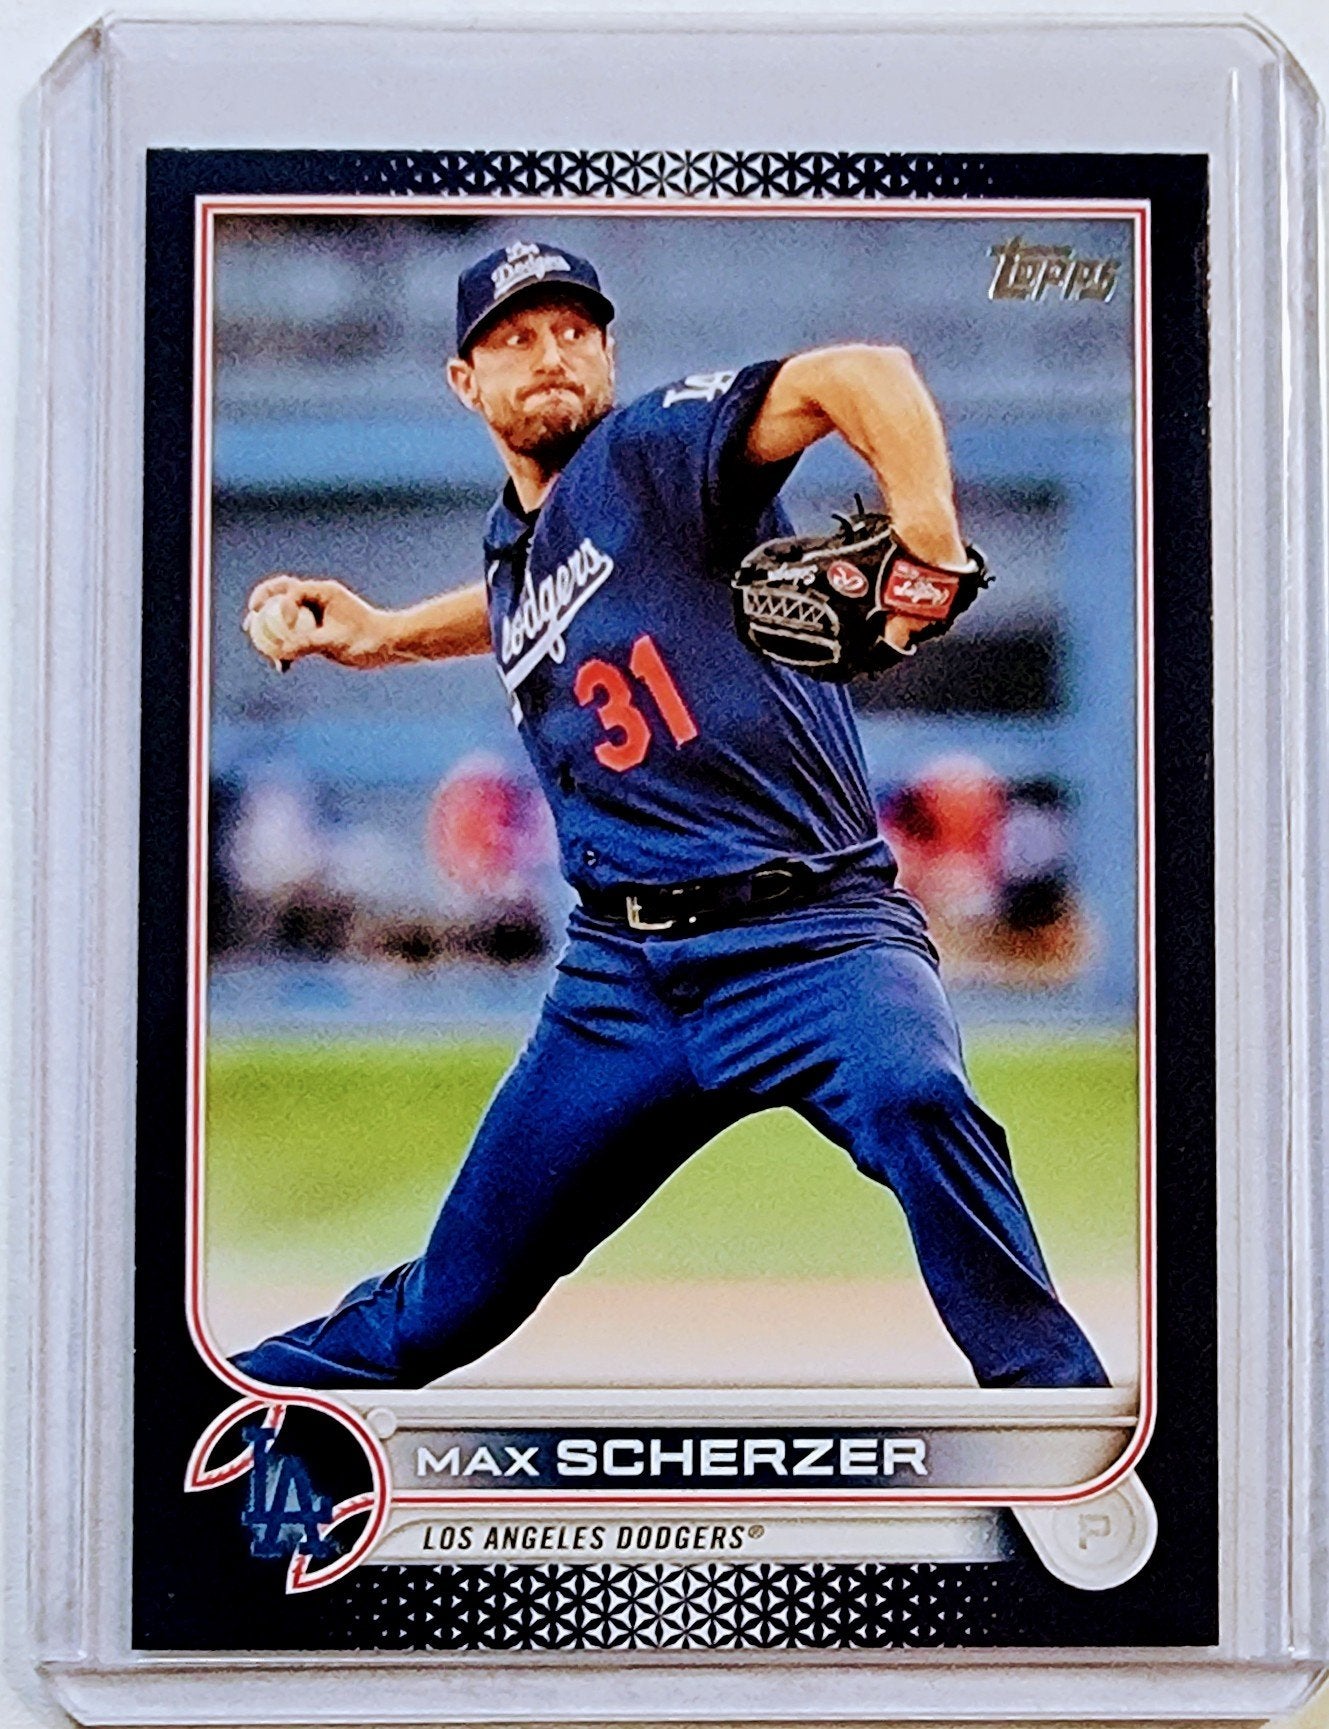 2022 Topps Max Scherzer Black Border Baseball Card simple Xclusive Collectibles   